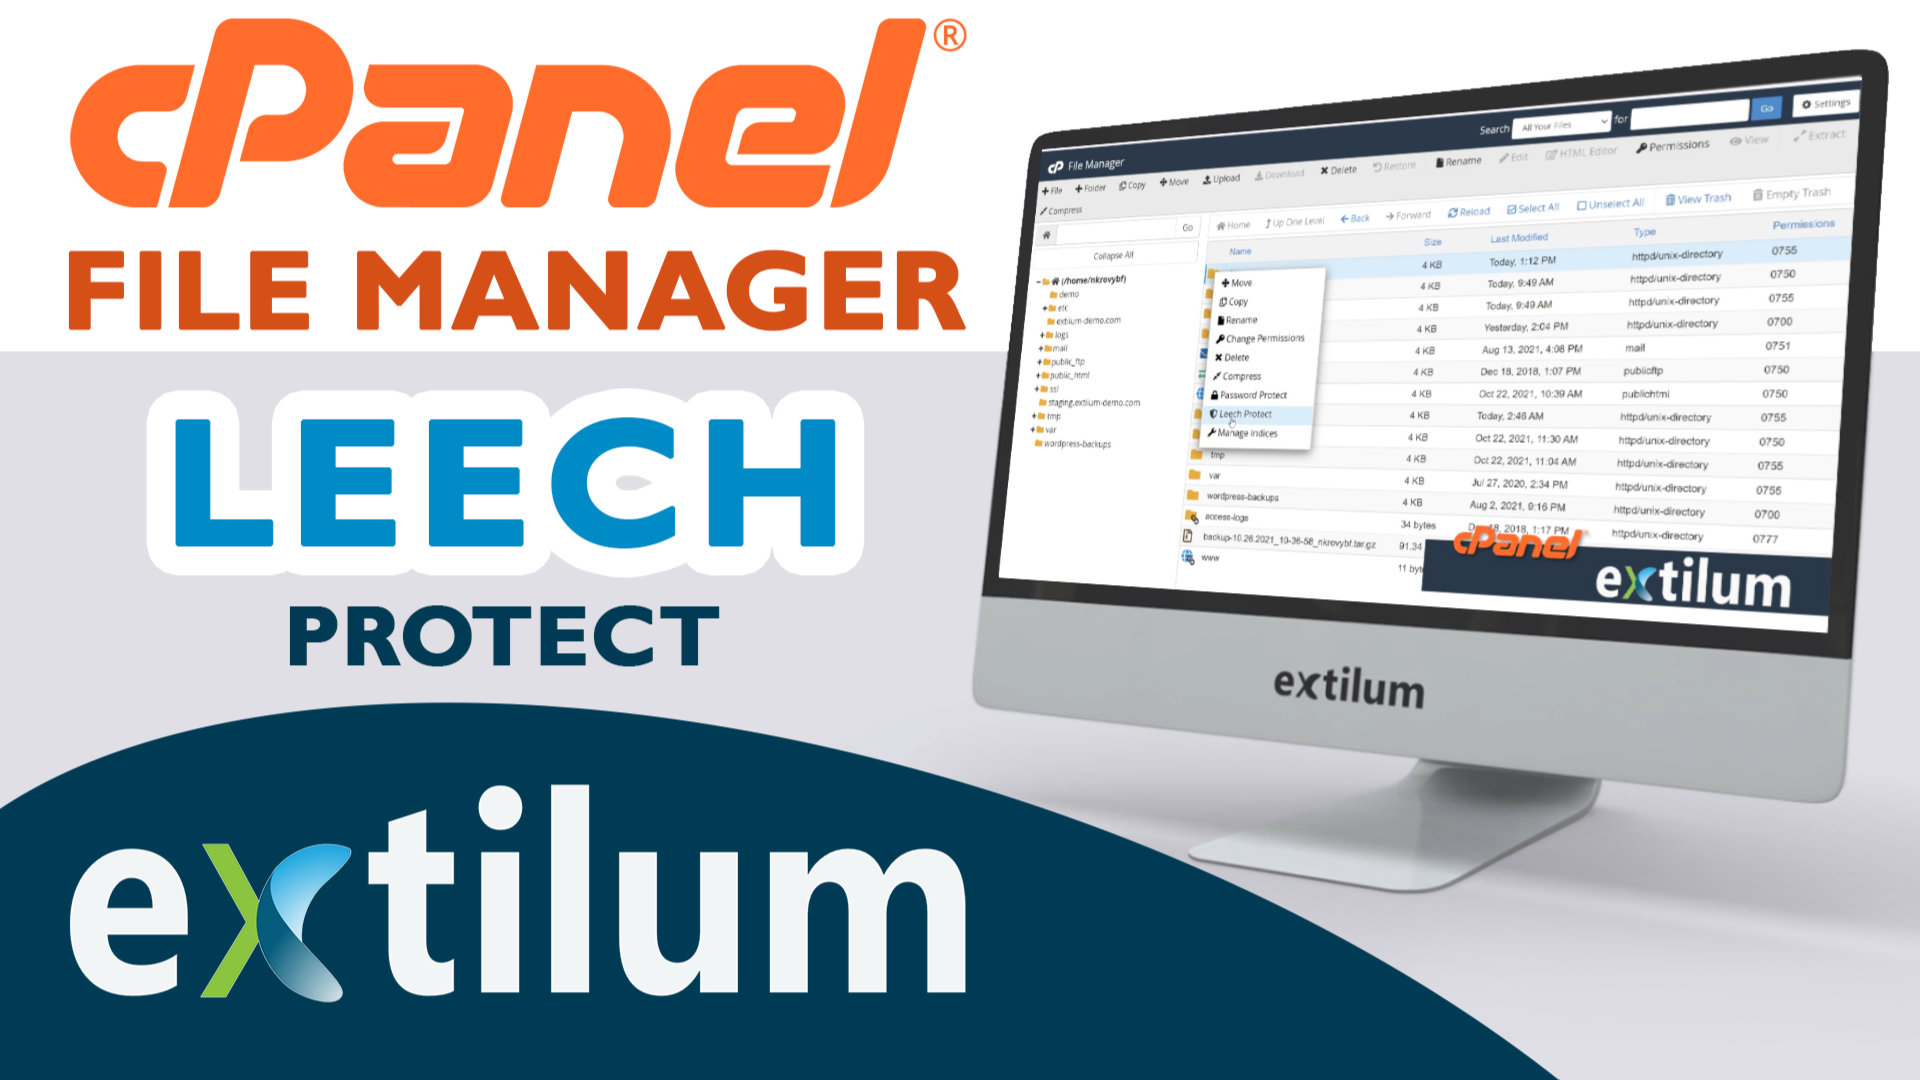 Extilum cpanel - file manager - leech protect